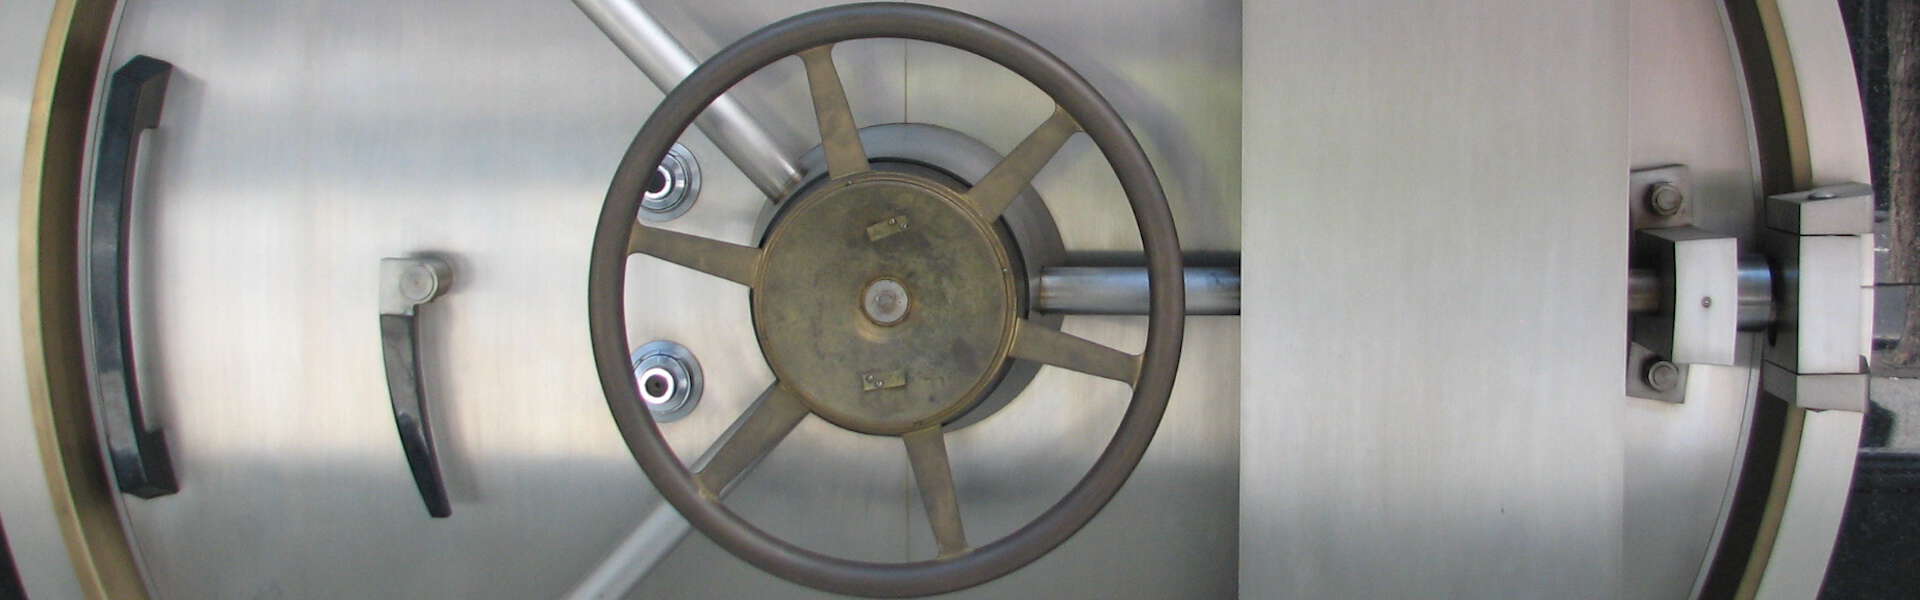 a safe lock